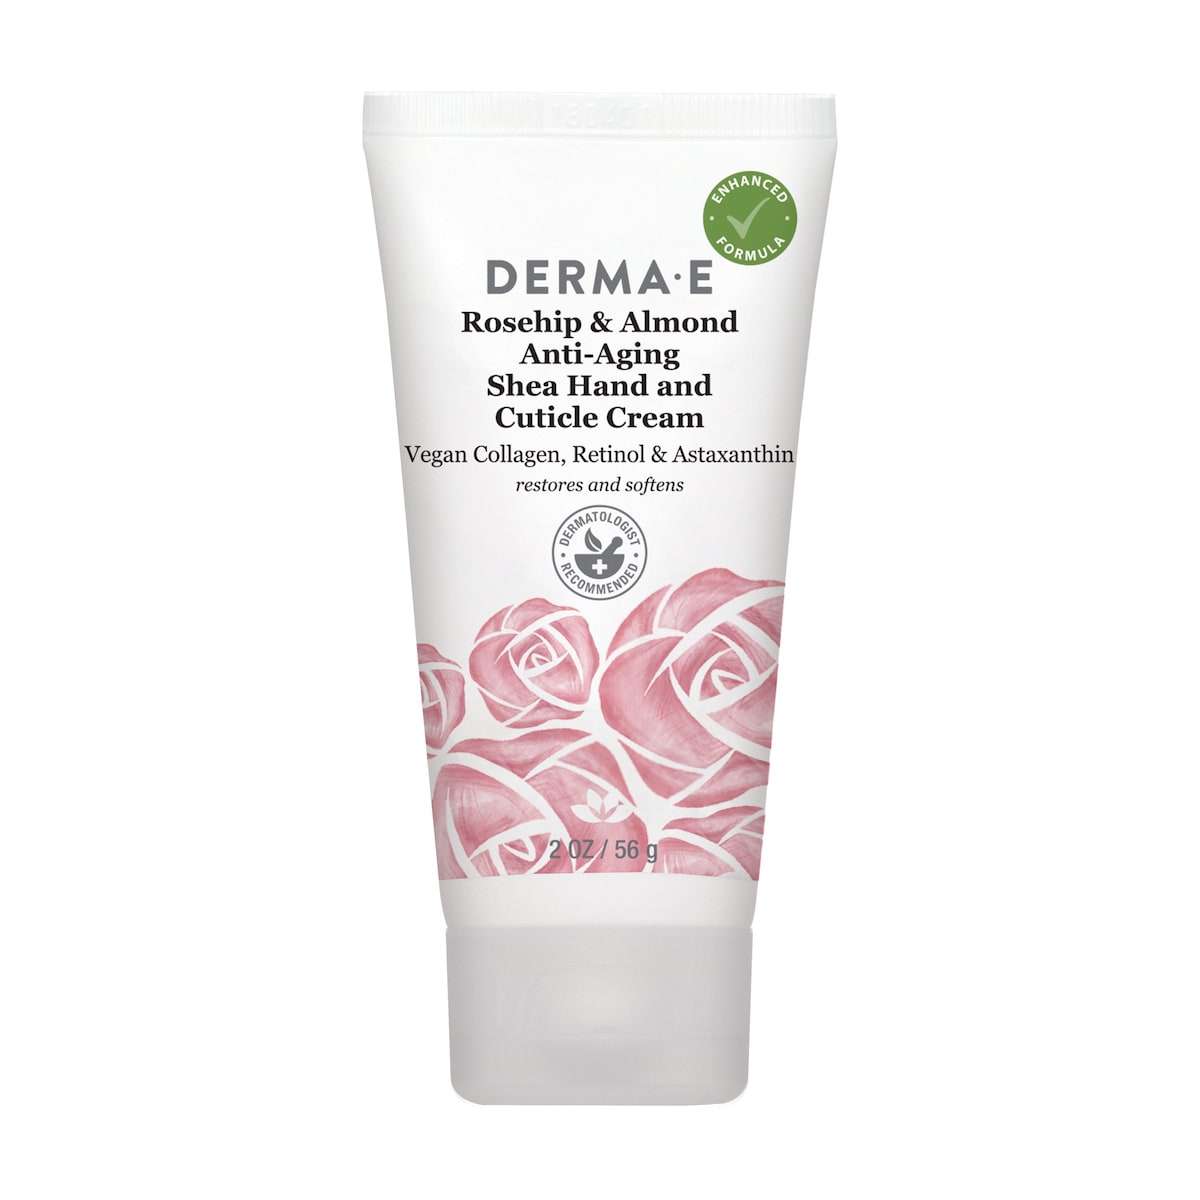 Derma E Rosehip & Almond Anti-Aging Shea Hand and Cuticle Cream 56g